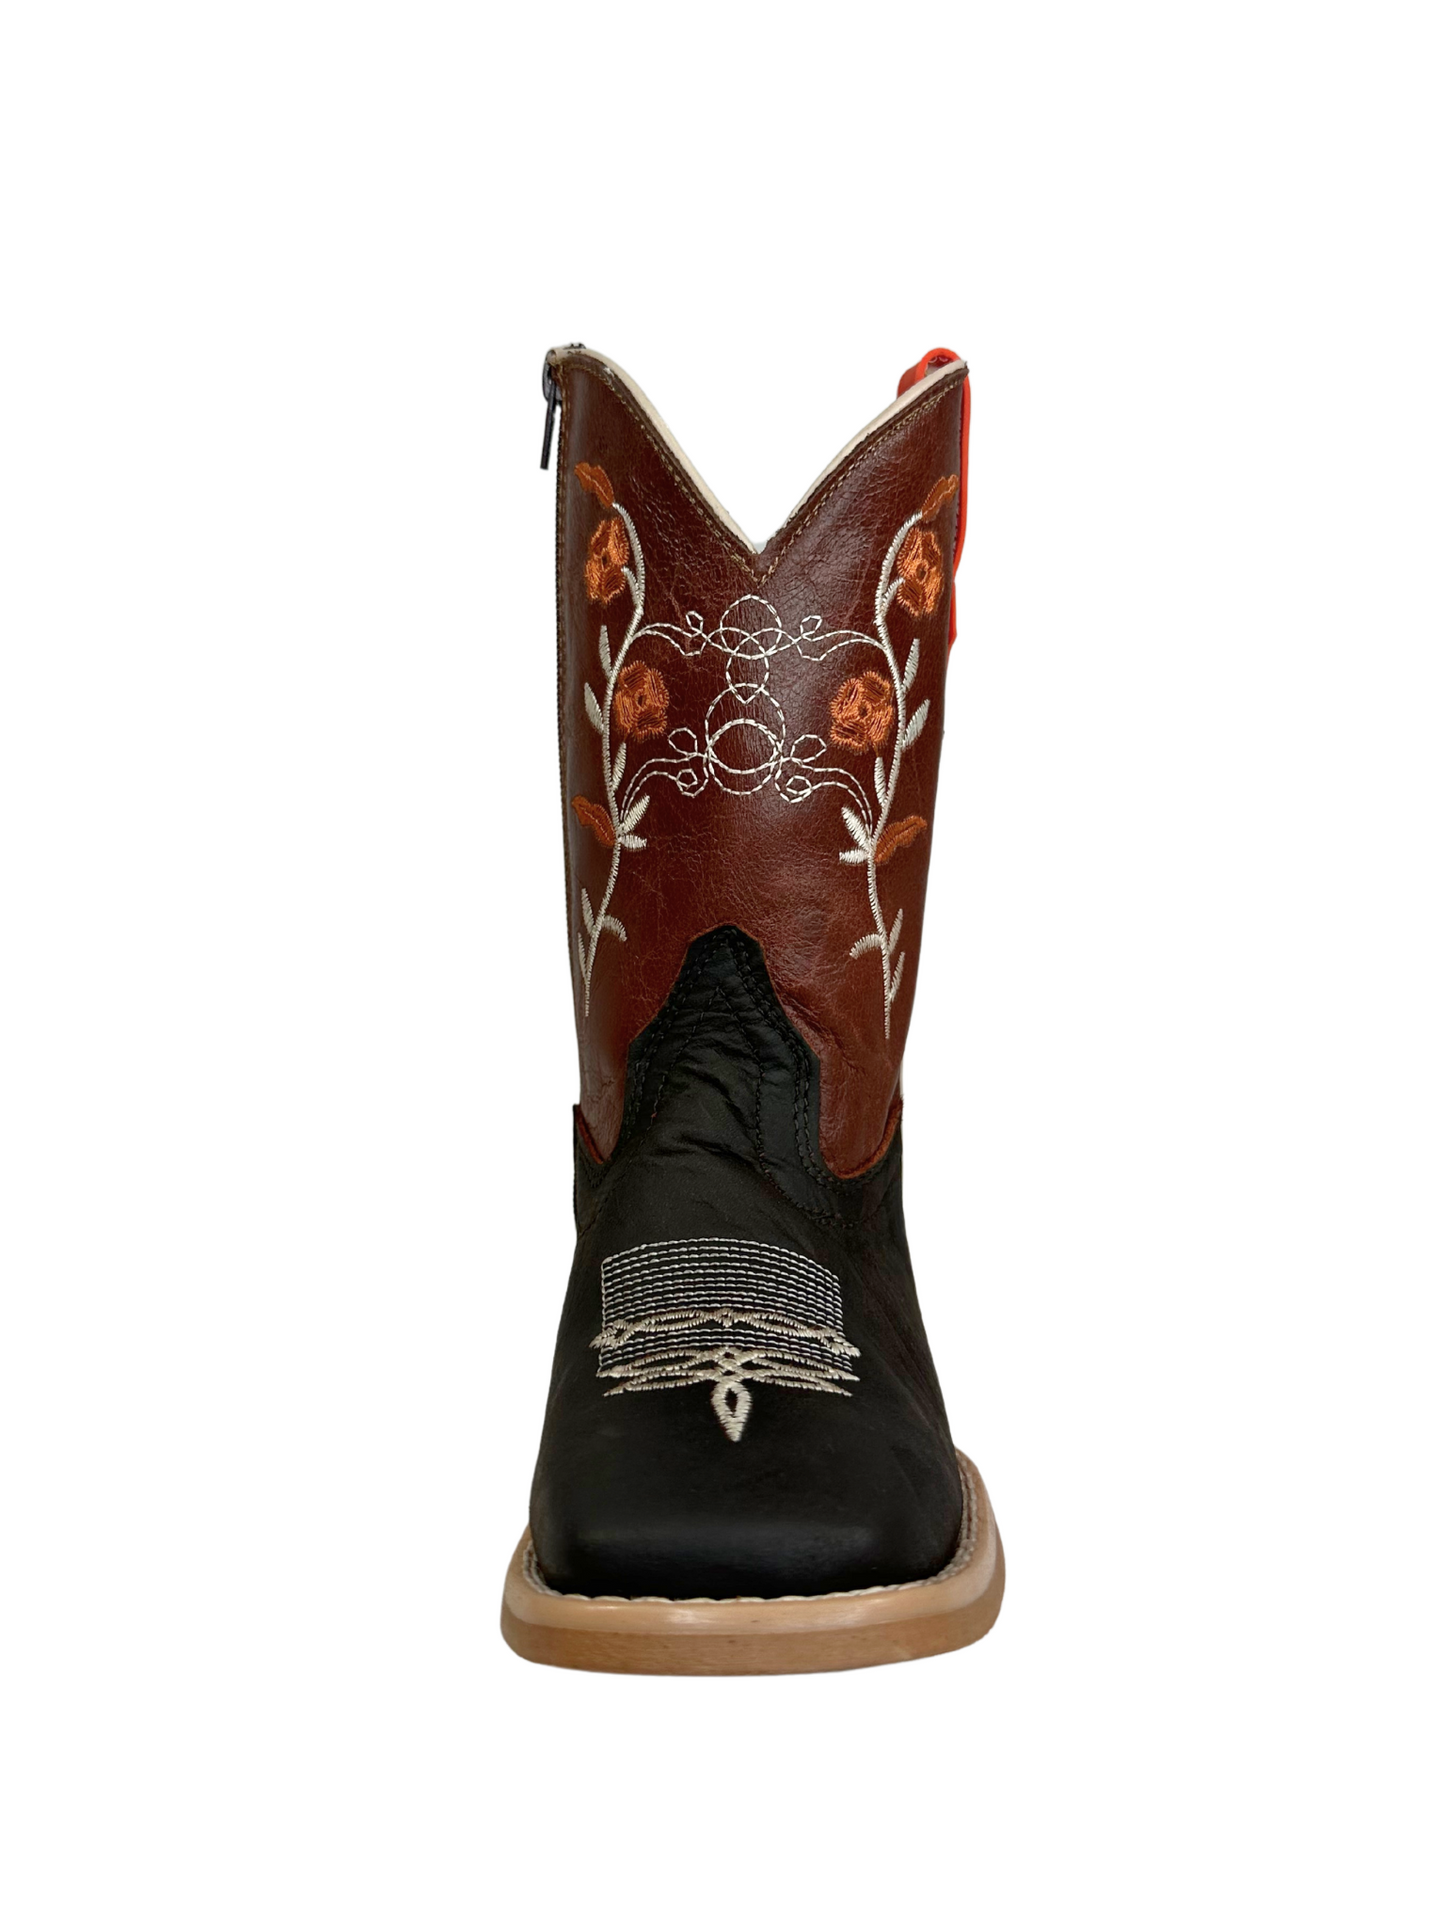 Hooch Girl's Brown Floral Boot